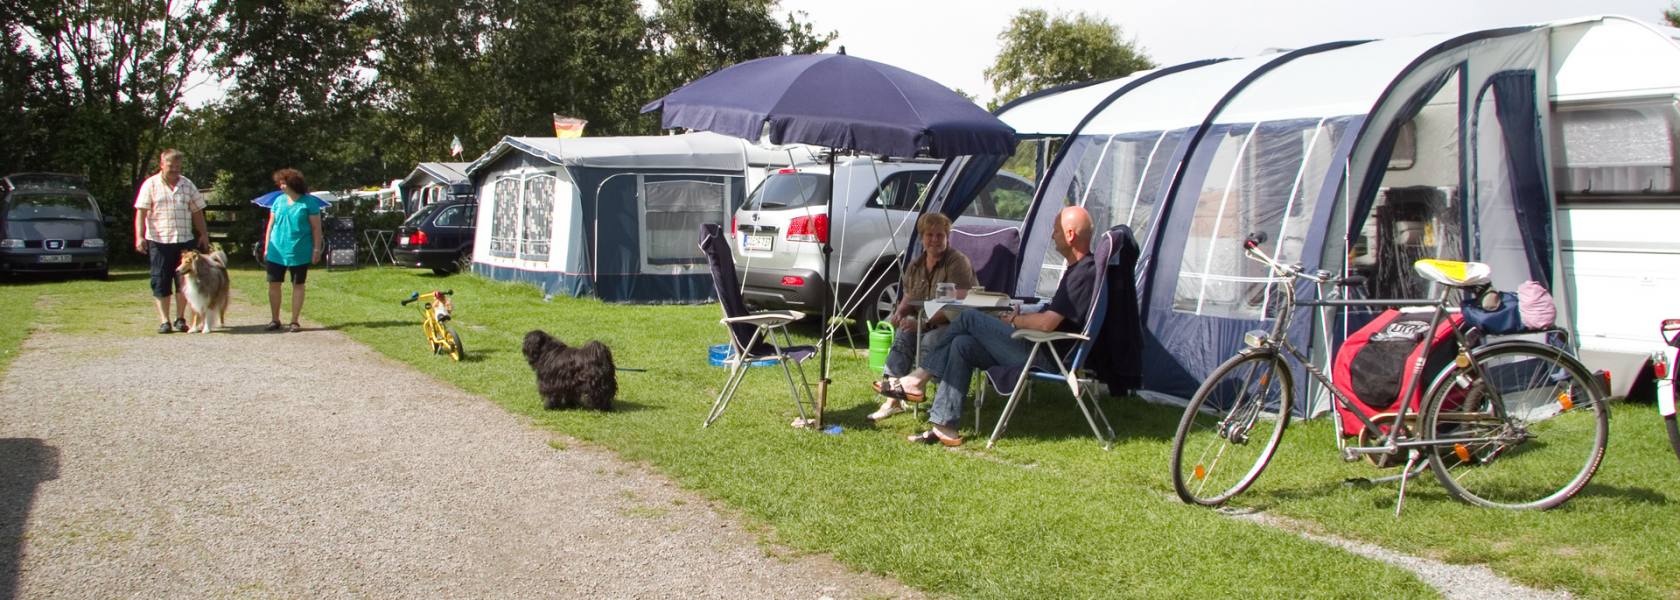 Camping mit Hund, © Nordsee-Camp Norddeich GmbH